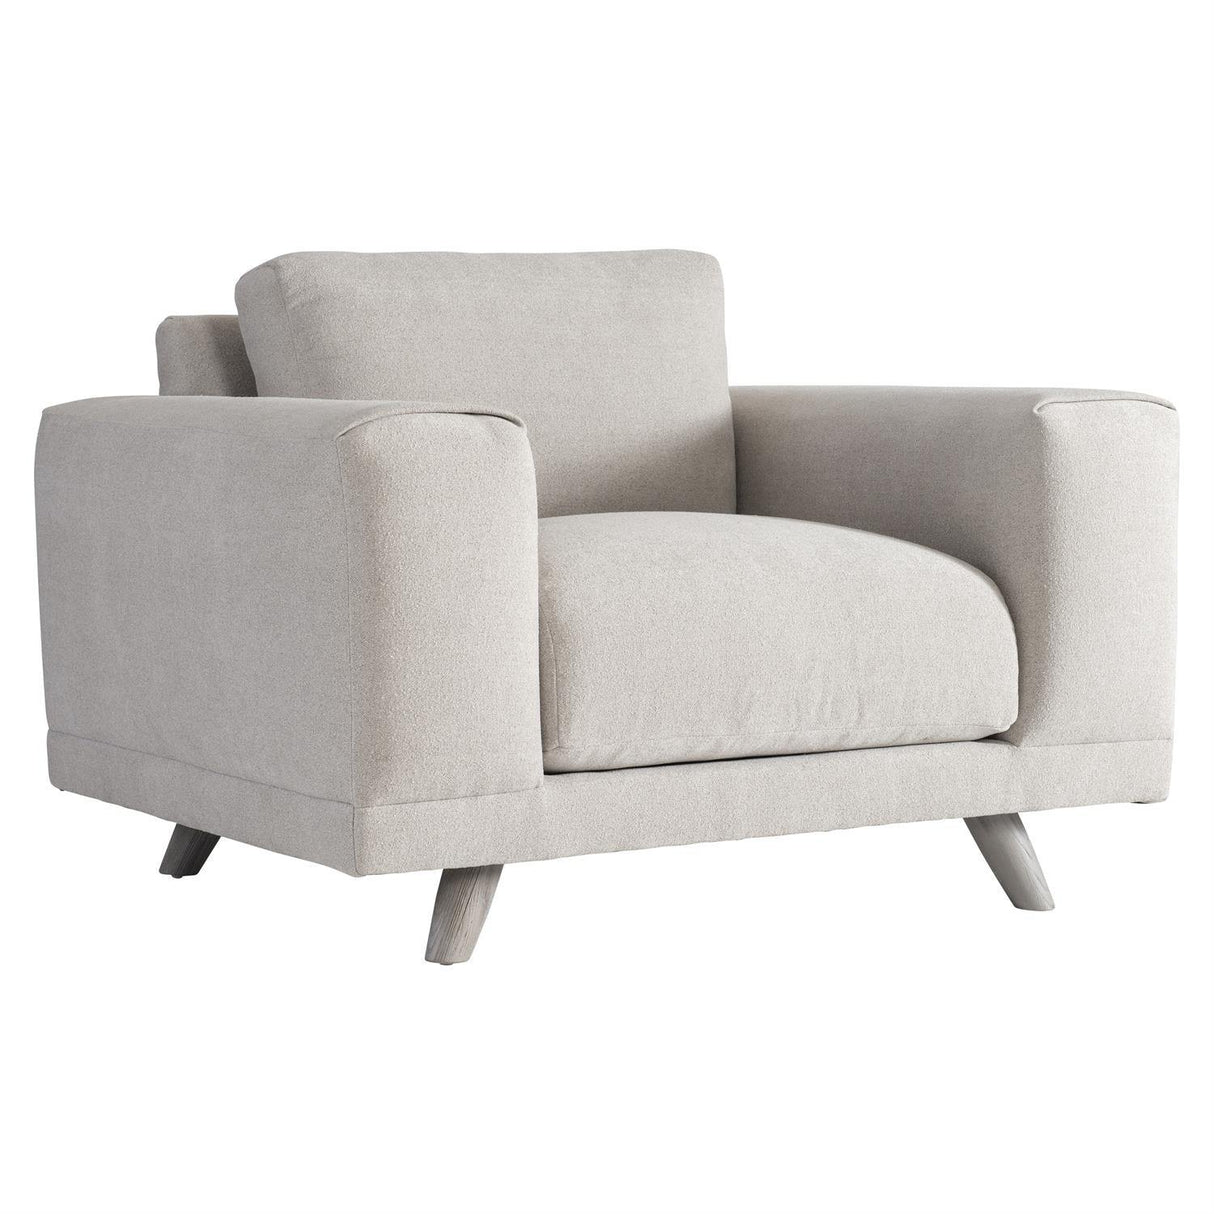 Bernhardt Plush Maren Chair - Home Elegance USA